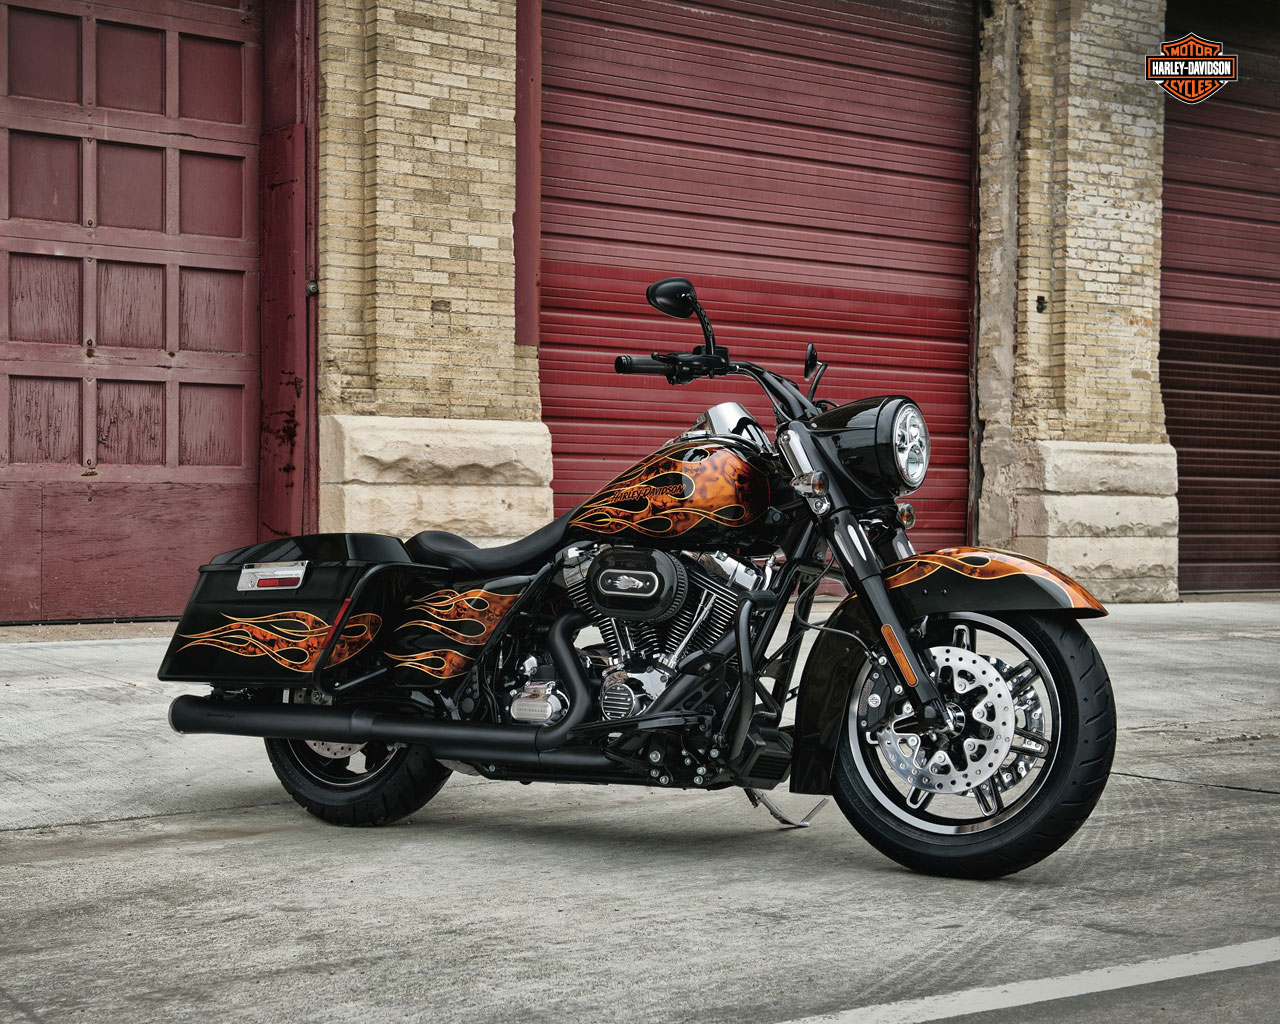 2012 Harley-Davidson FLHR Road King Review